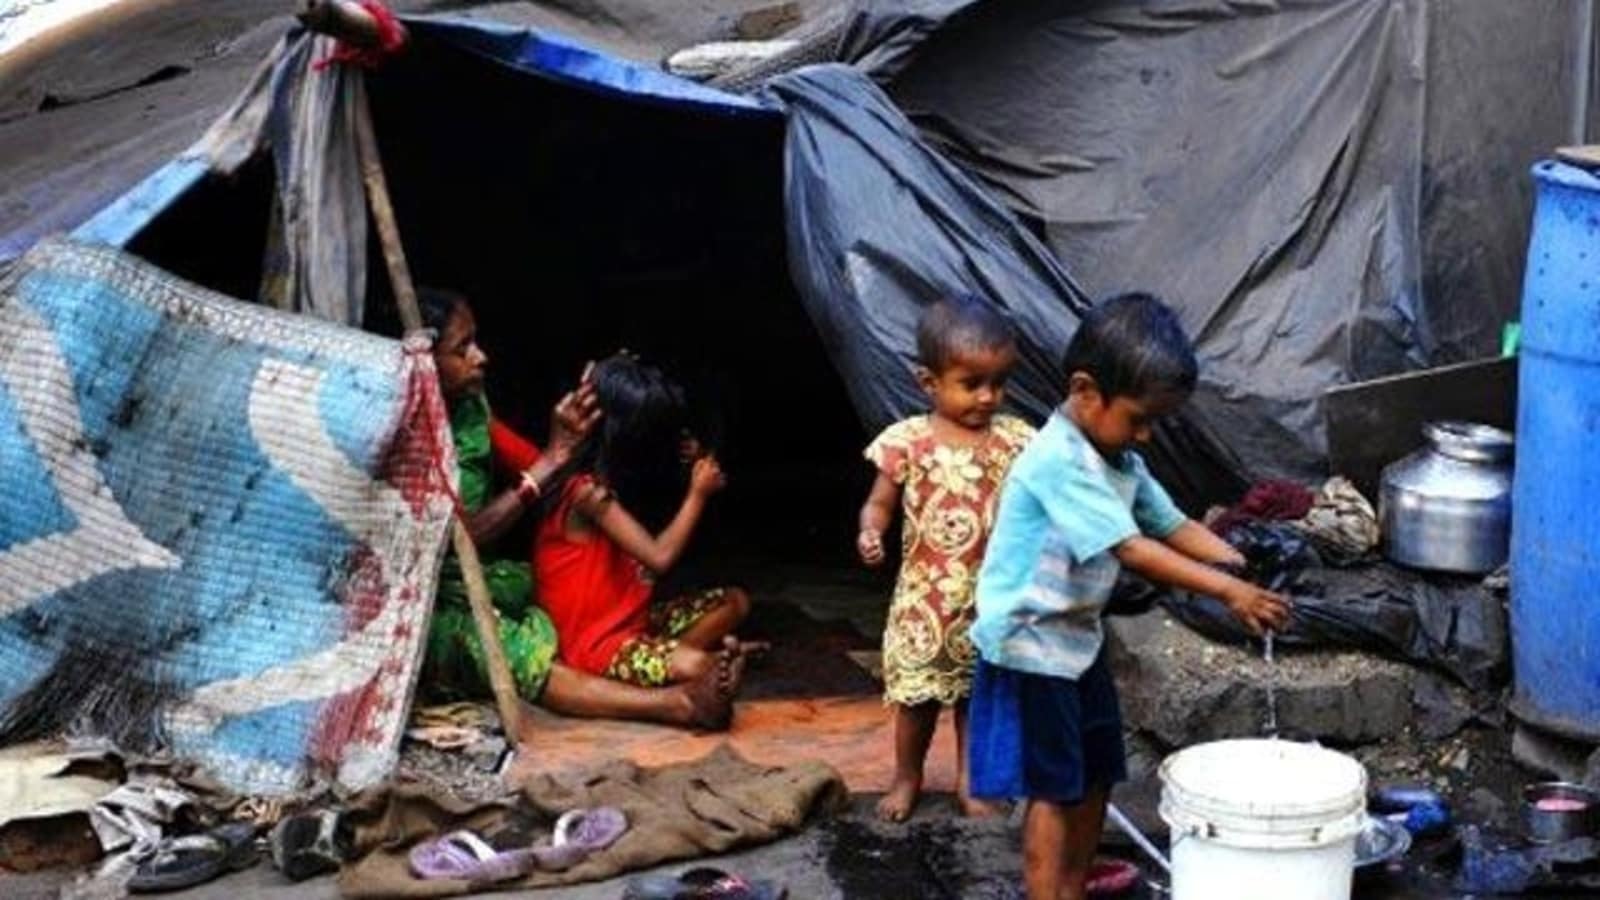 India's great poverty debate: Season 2 | Latest News India - Hindustan Times